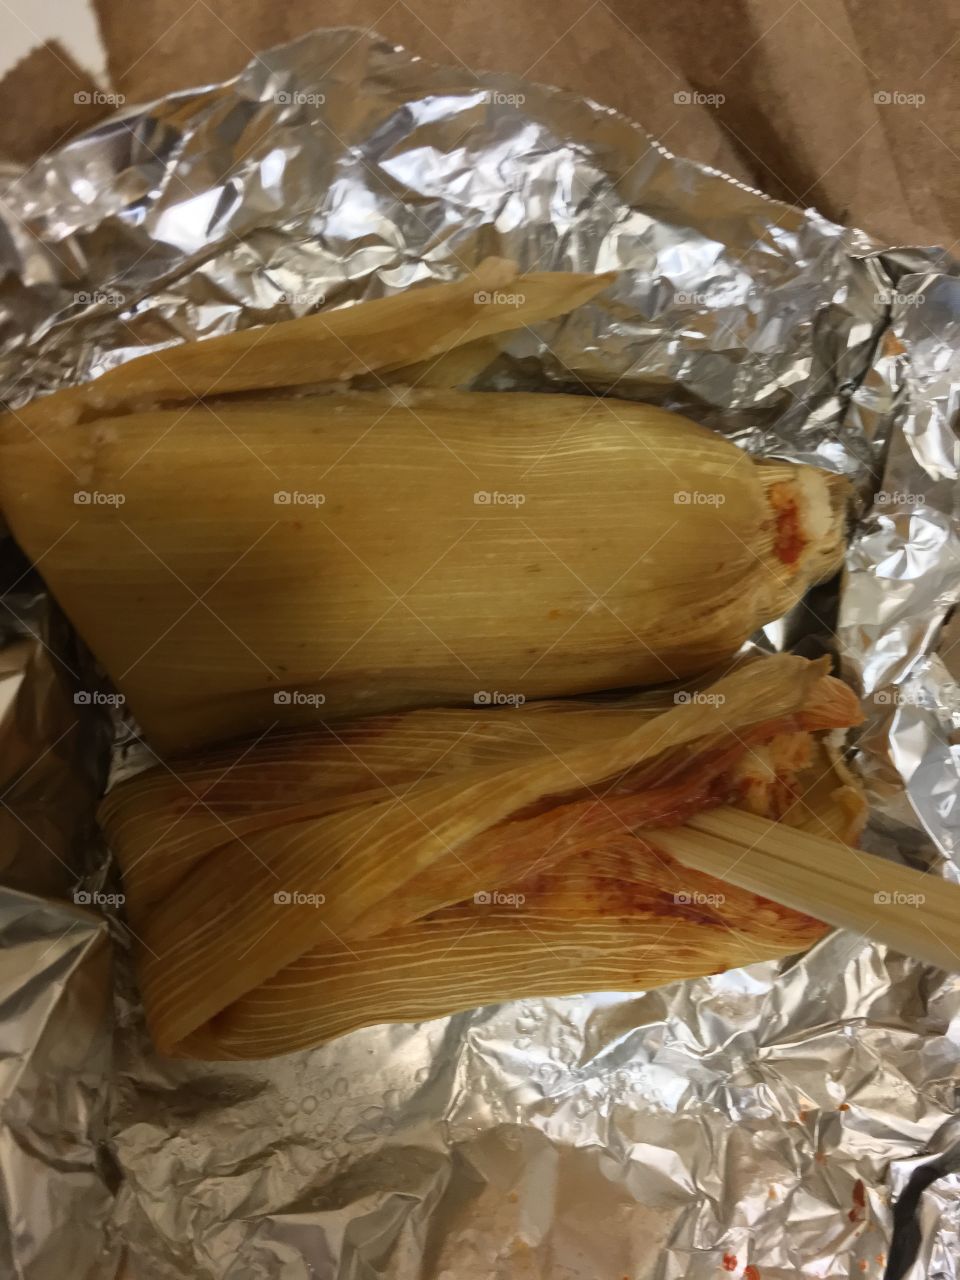 Brooklyn nyc street food tamales by chopsticks